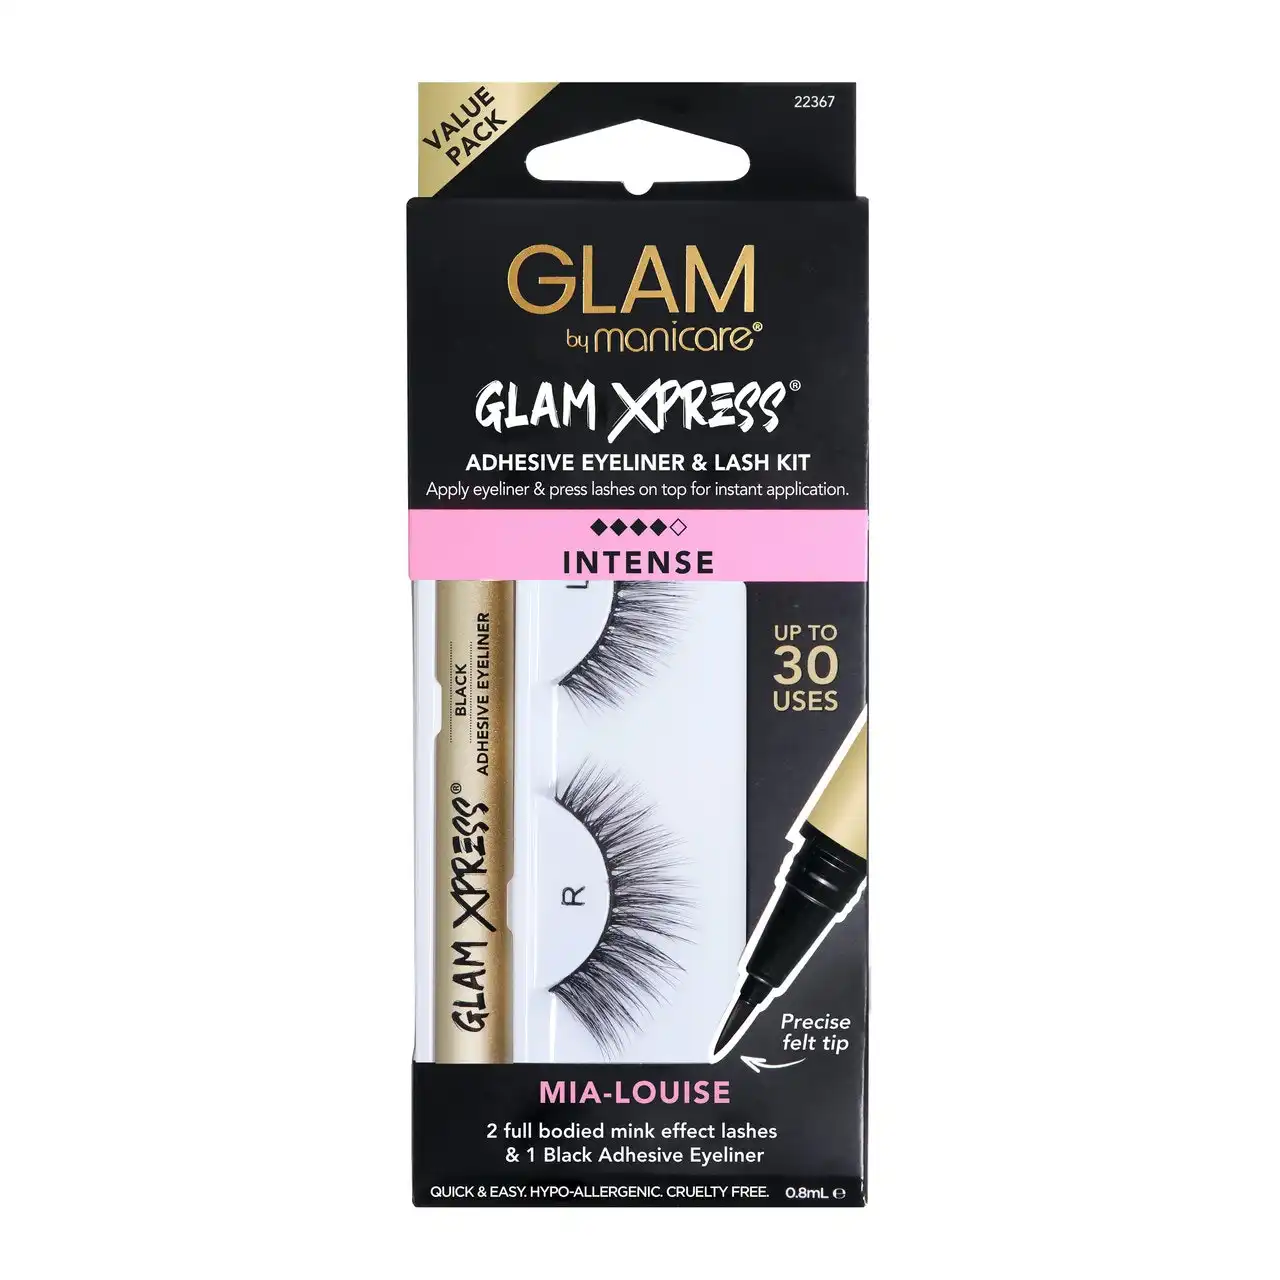 Glam by Manicare Mia-louise Glam Xpress(R) Adhesive Eyeliner & Lash Kit